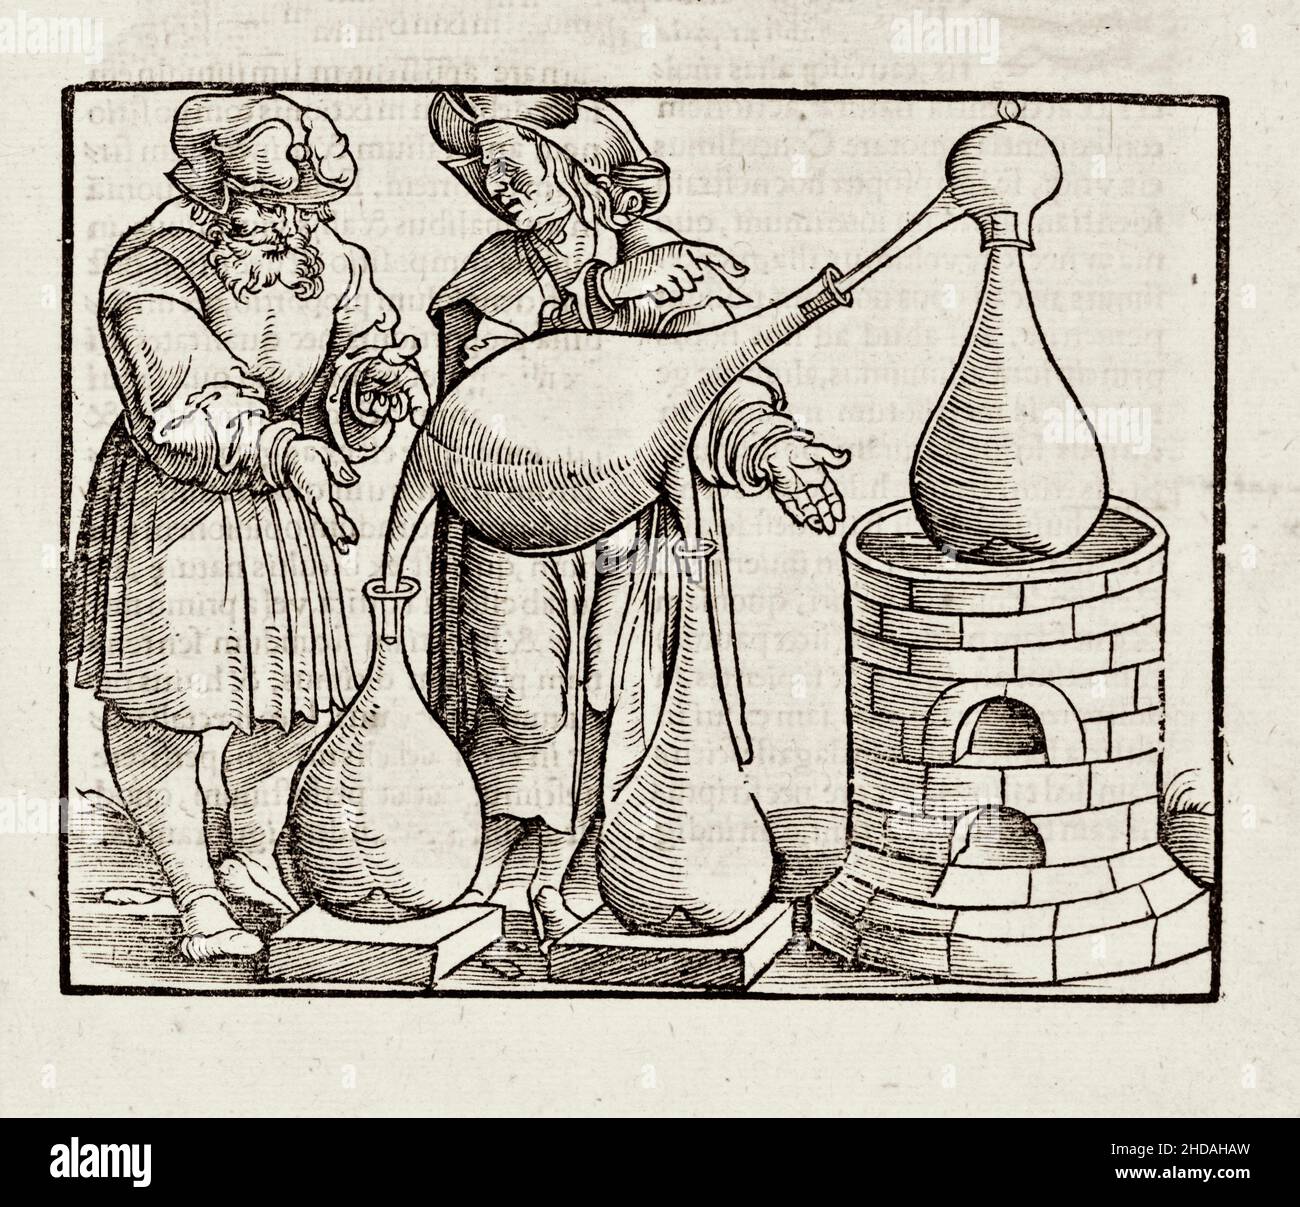 The 16th century illustrations from book on Alchemy. By Johann Grüninger, 1531. Stock Photo